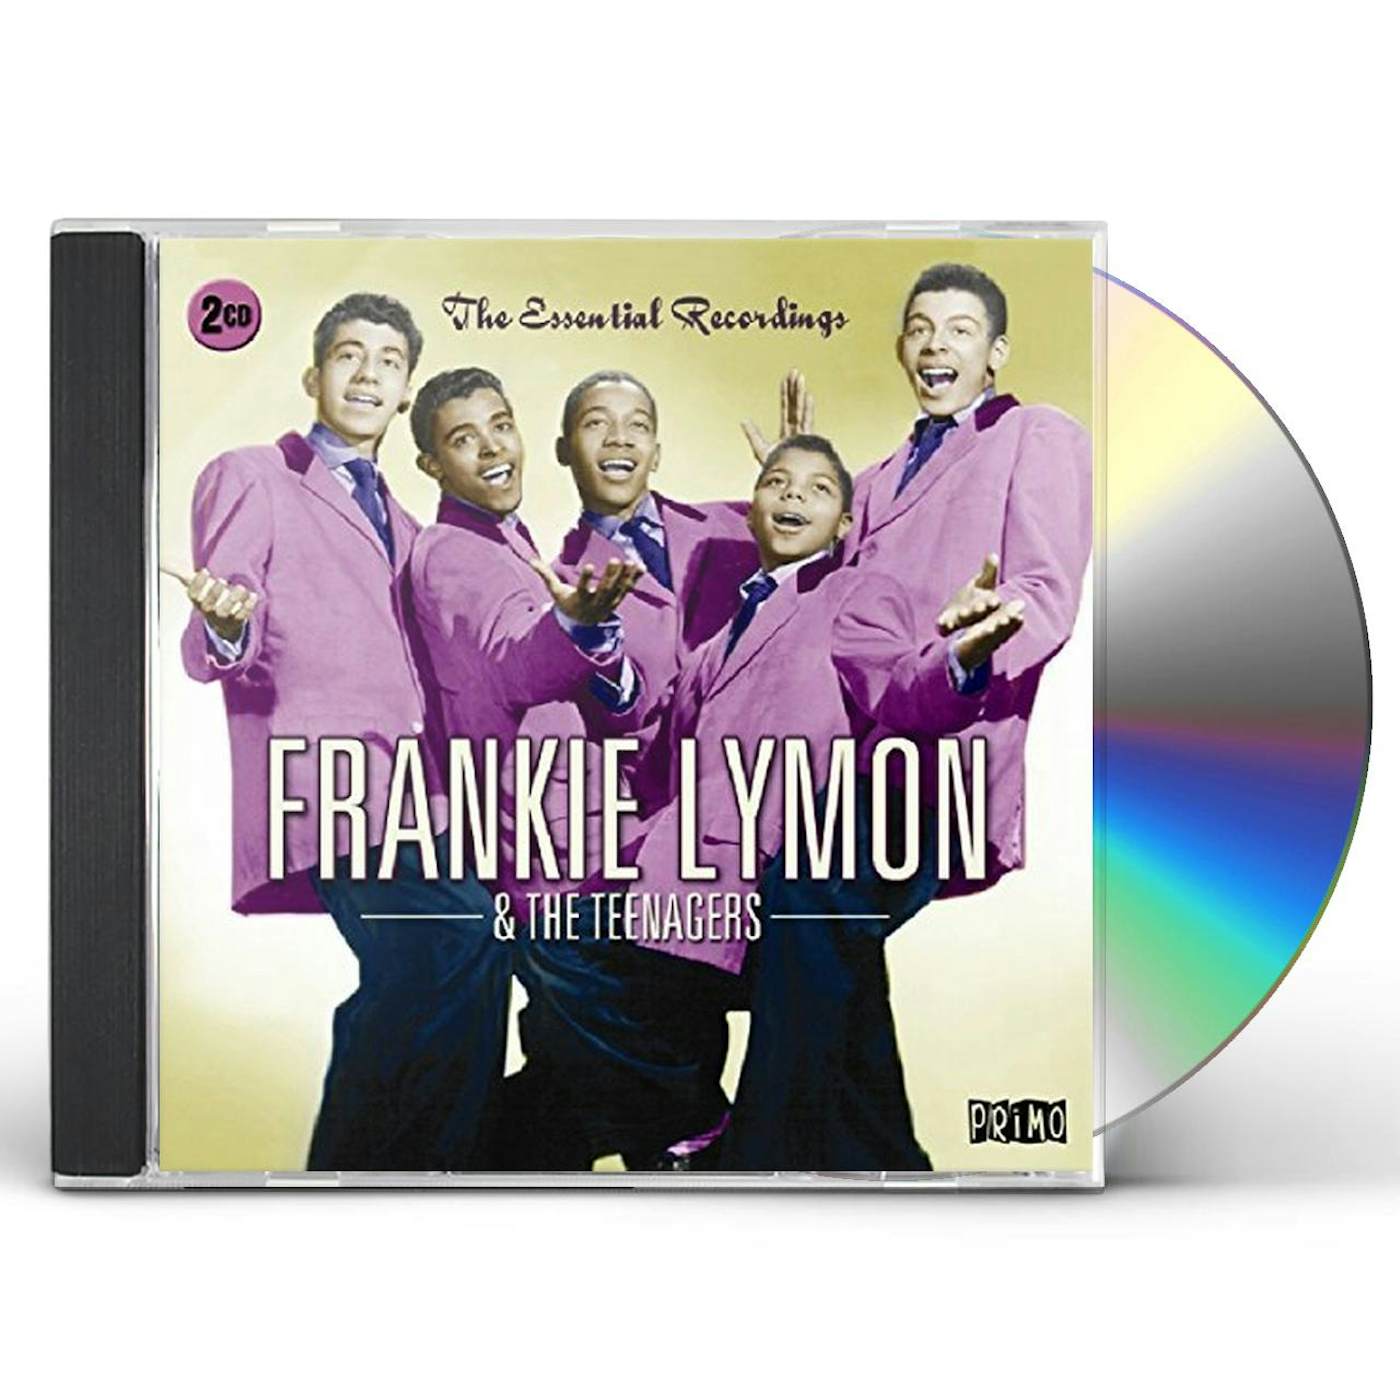 Frankie Lymon & The Teenagers ESSENTIAL RECORDINGS CD